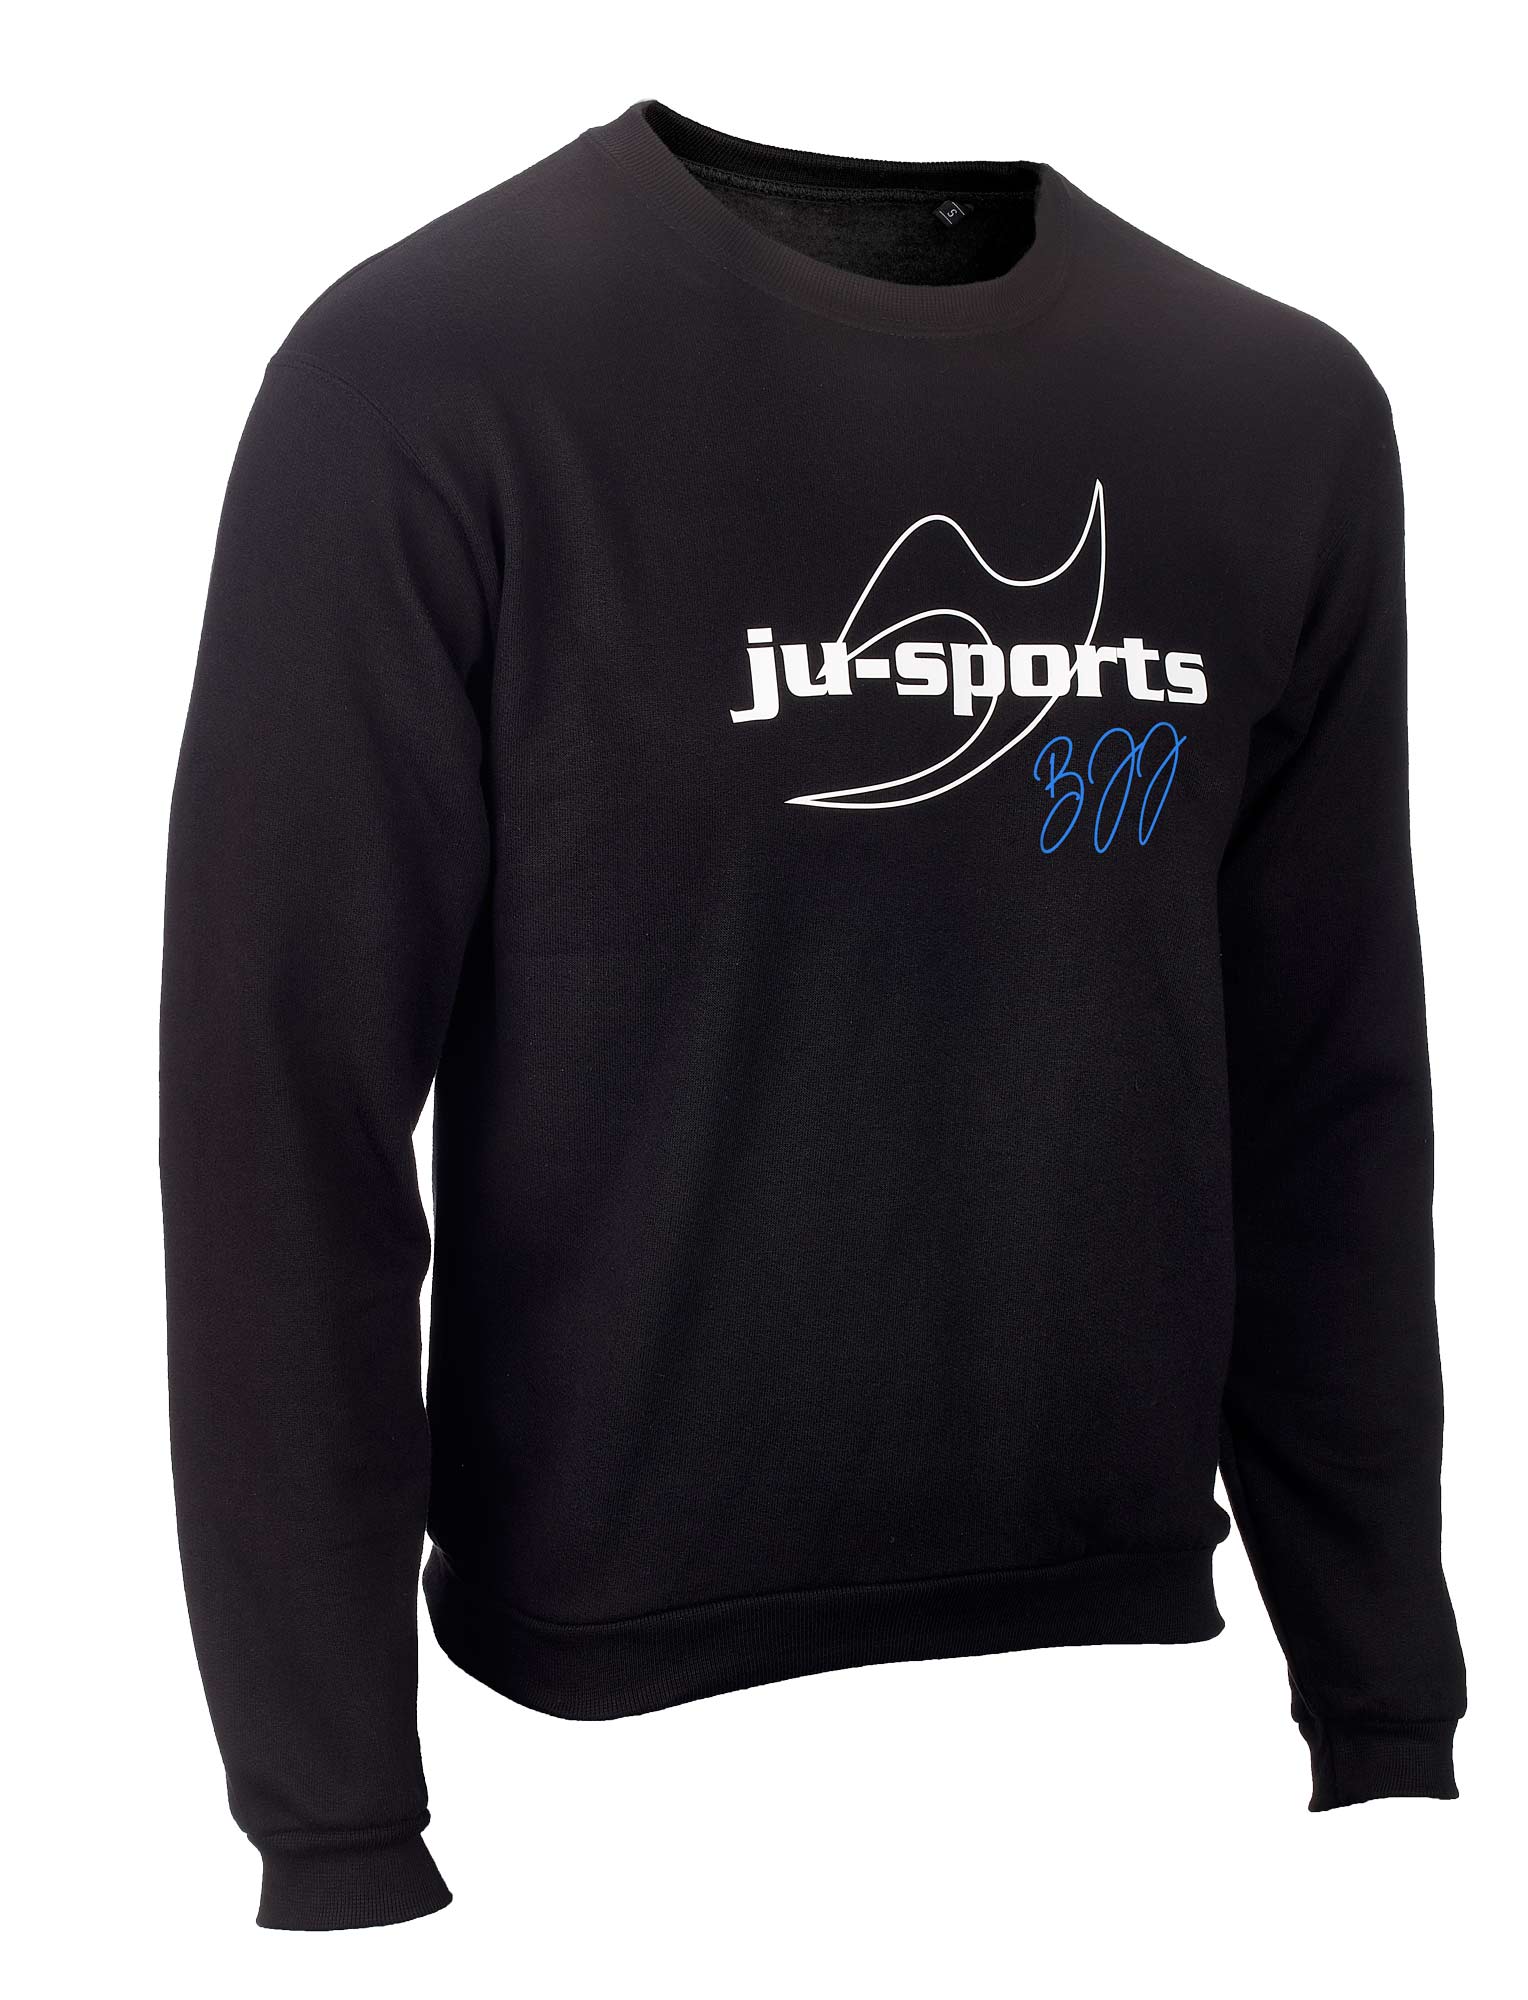 Ju-Sports Signature Line Sweater BJJ 